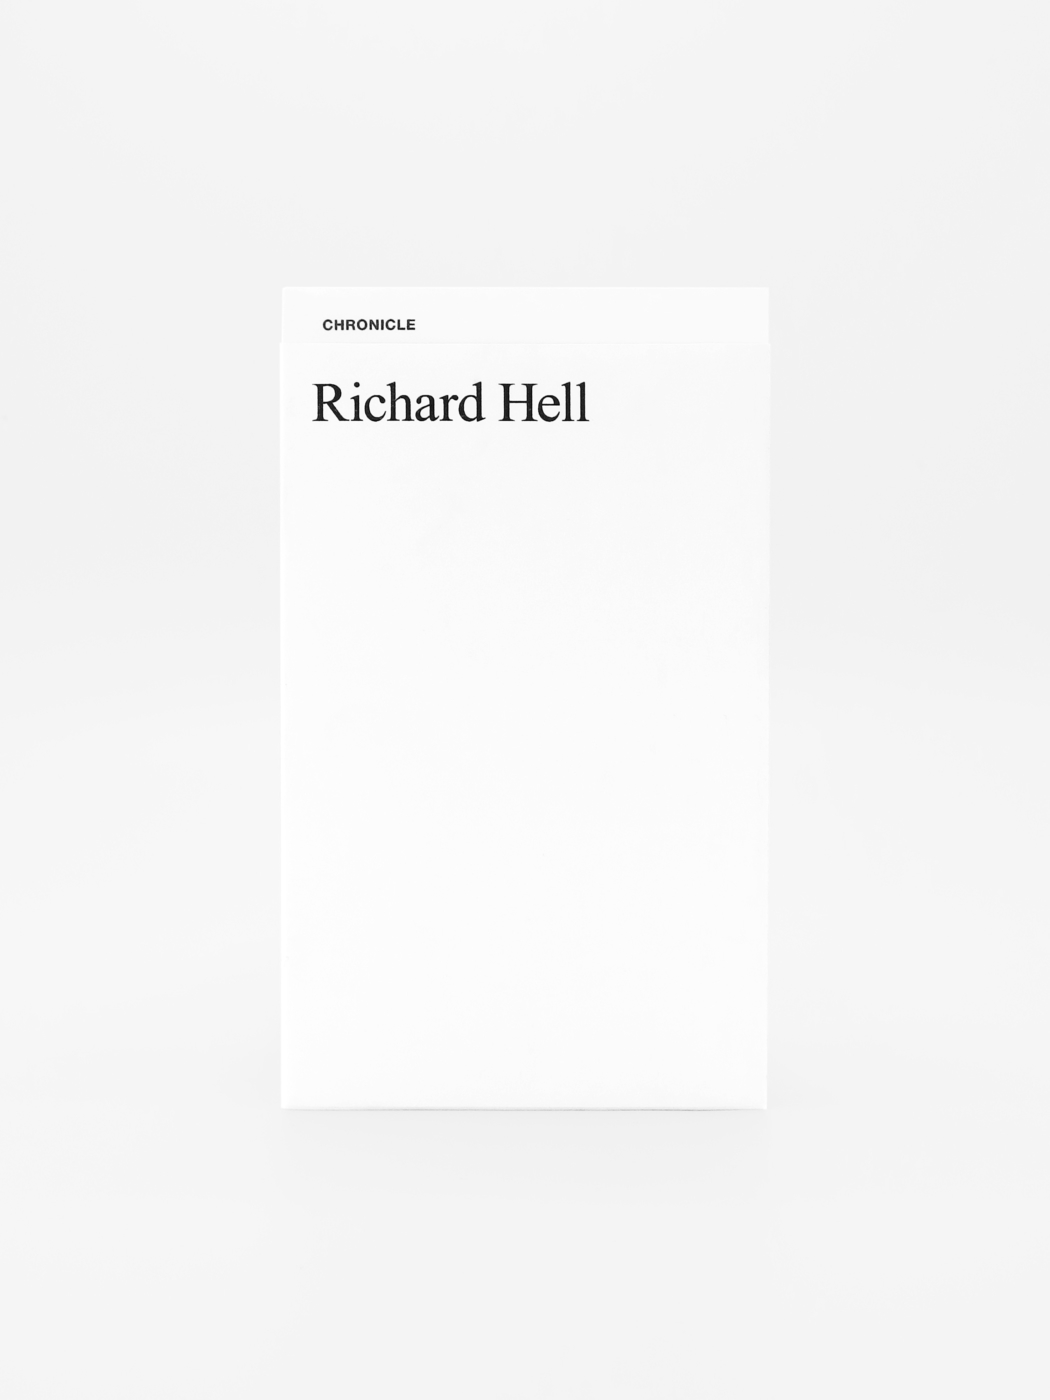 Richard Hell, Chronicle